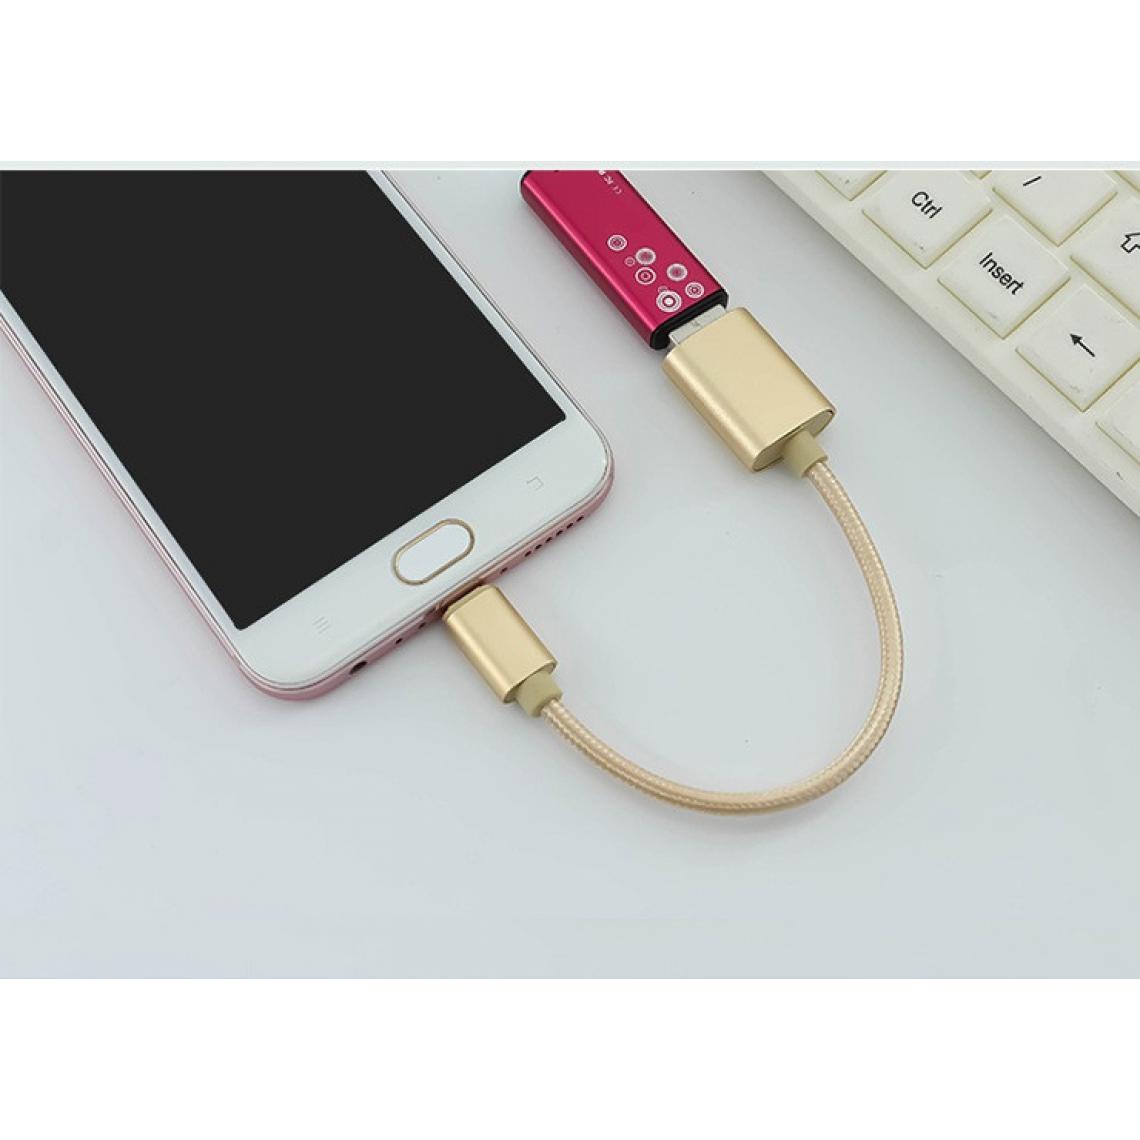 Shot - Adaptateur Type C/USB pour "SAMSUNG Galaxy Note 20" Smartphone & MAC USB-C Clef (OR) - Autres accessoires smartphone